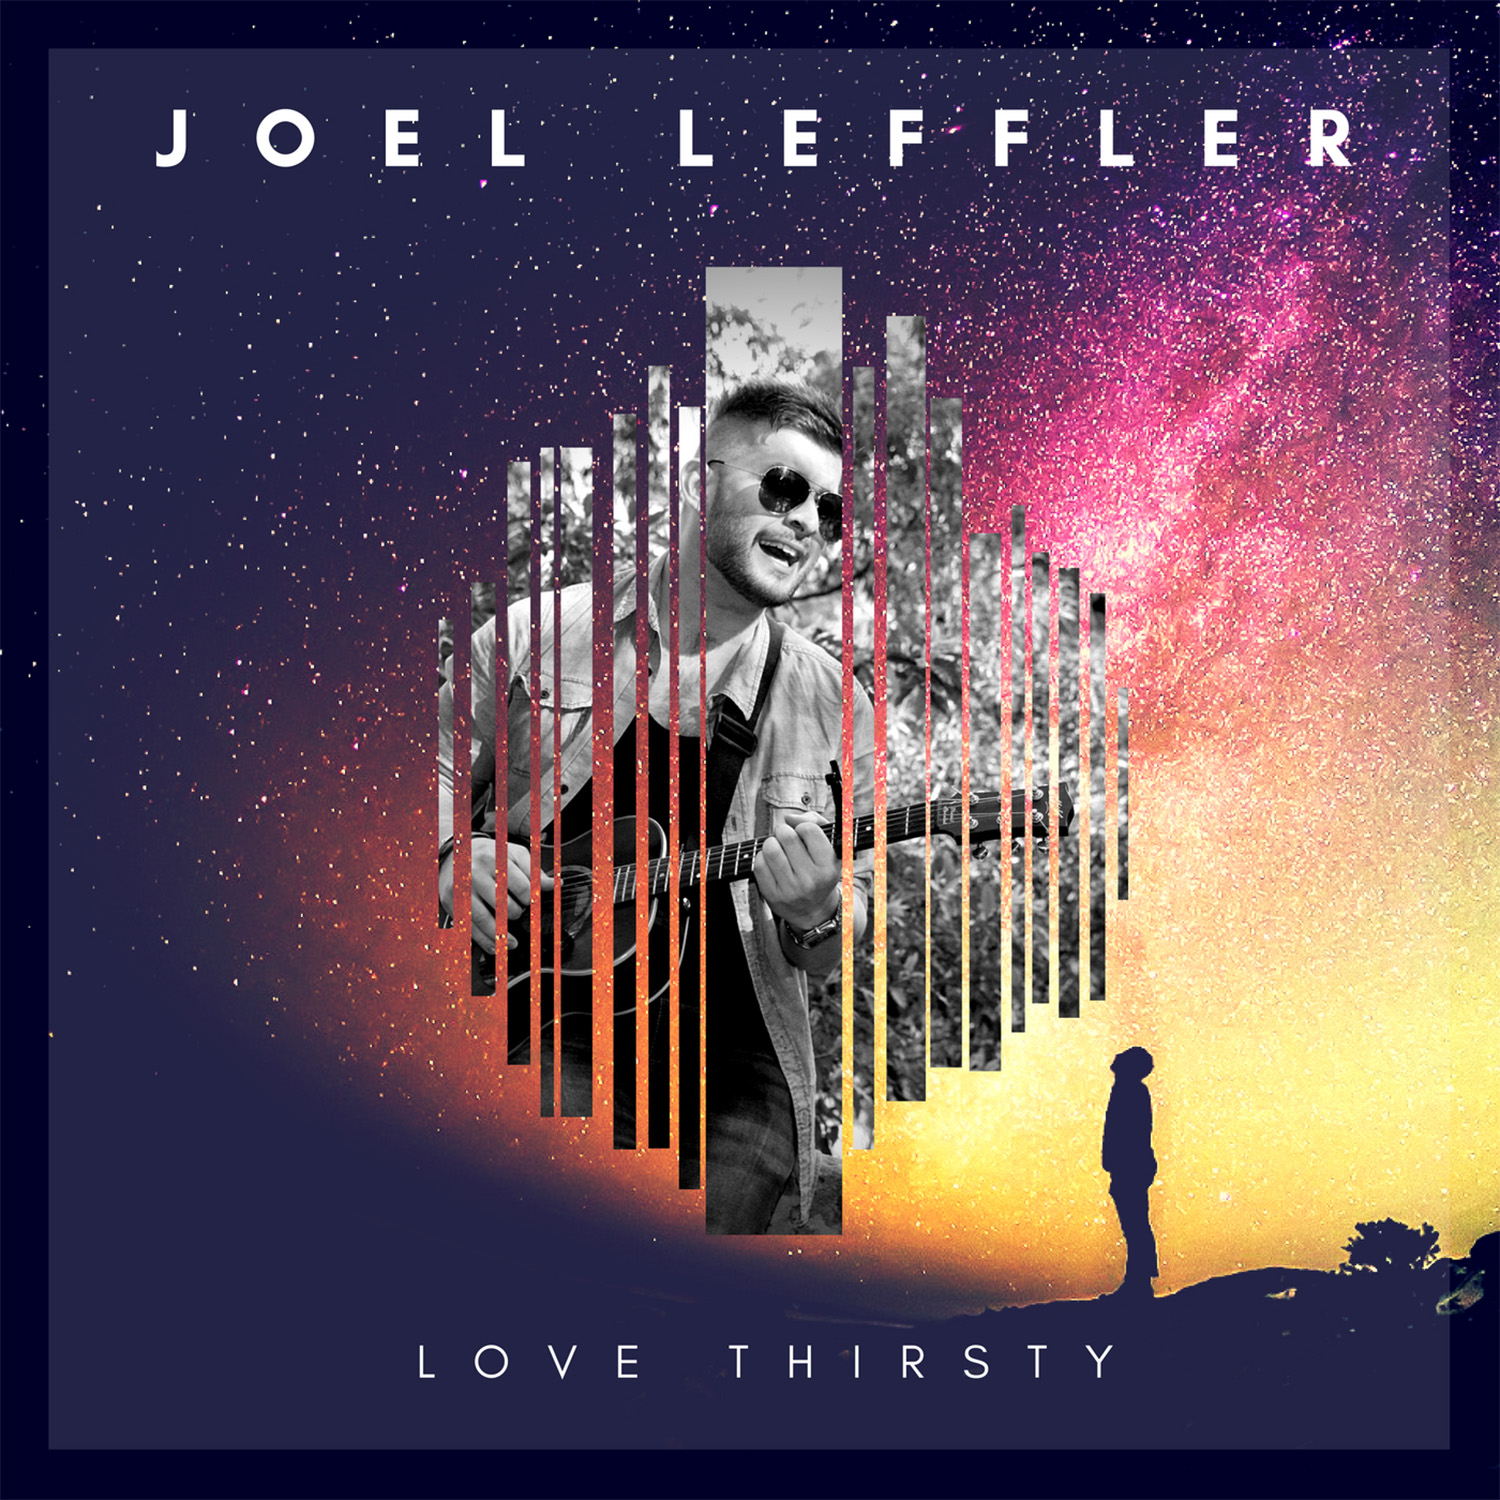 final-art-love-thirsty-joel-leffler-v3-v4-copy